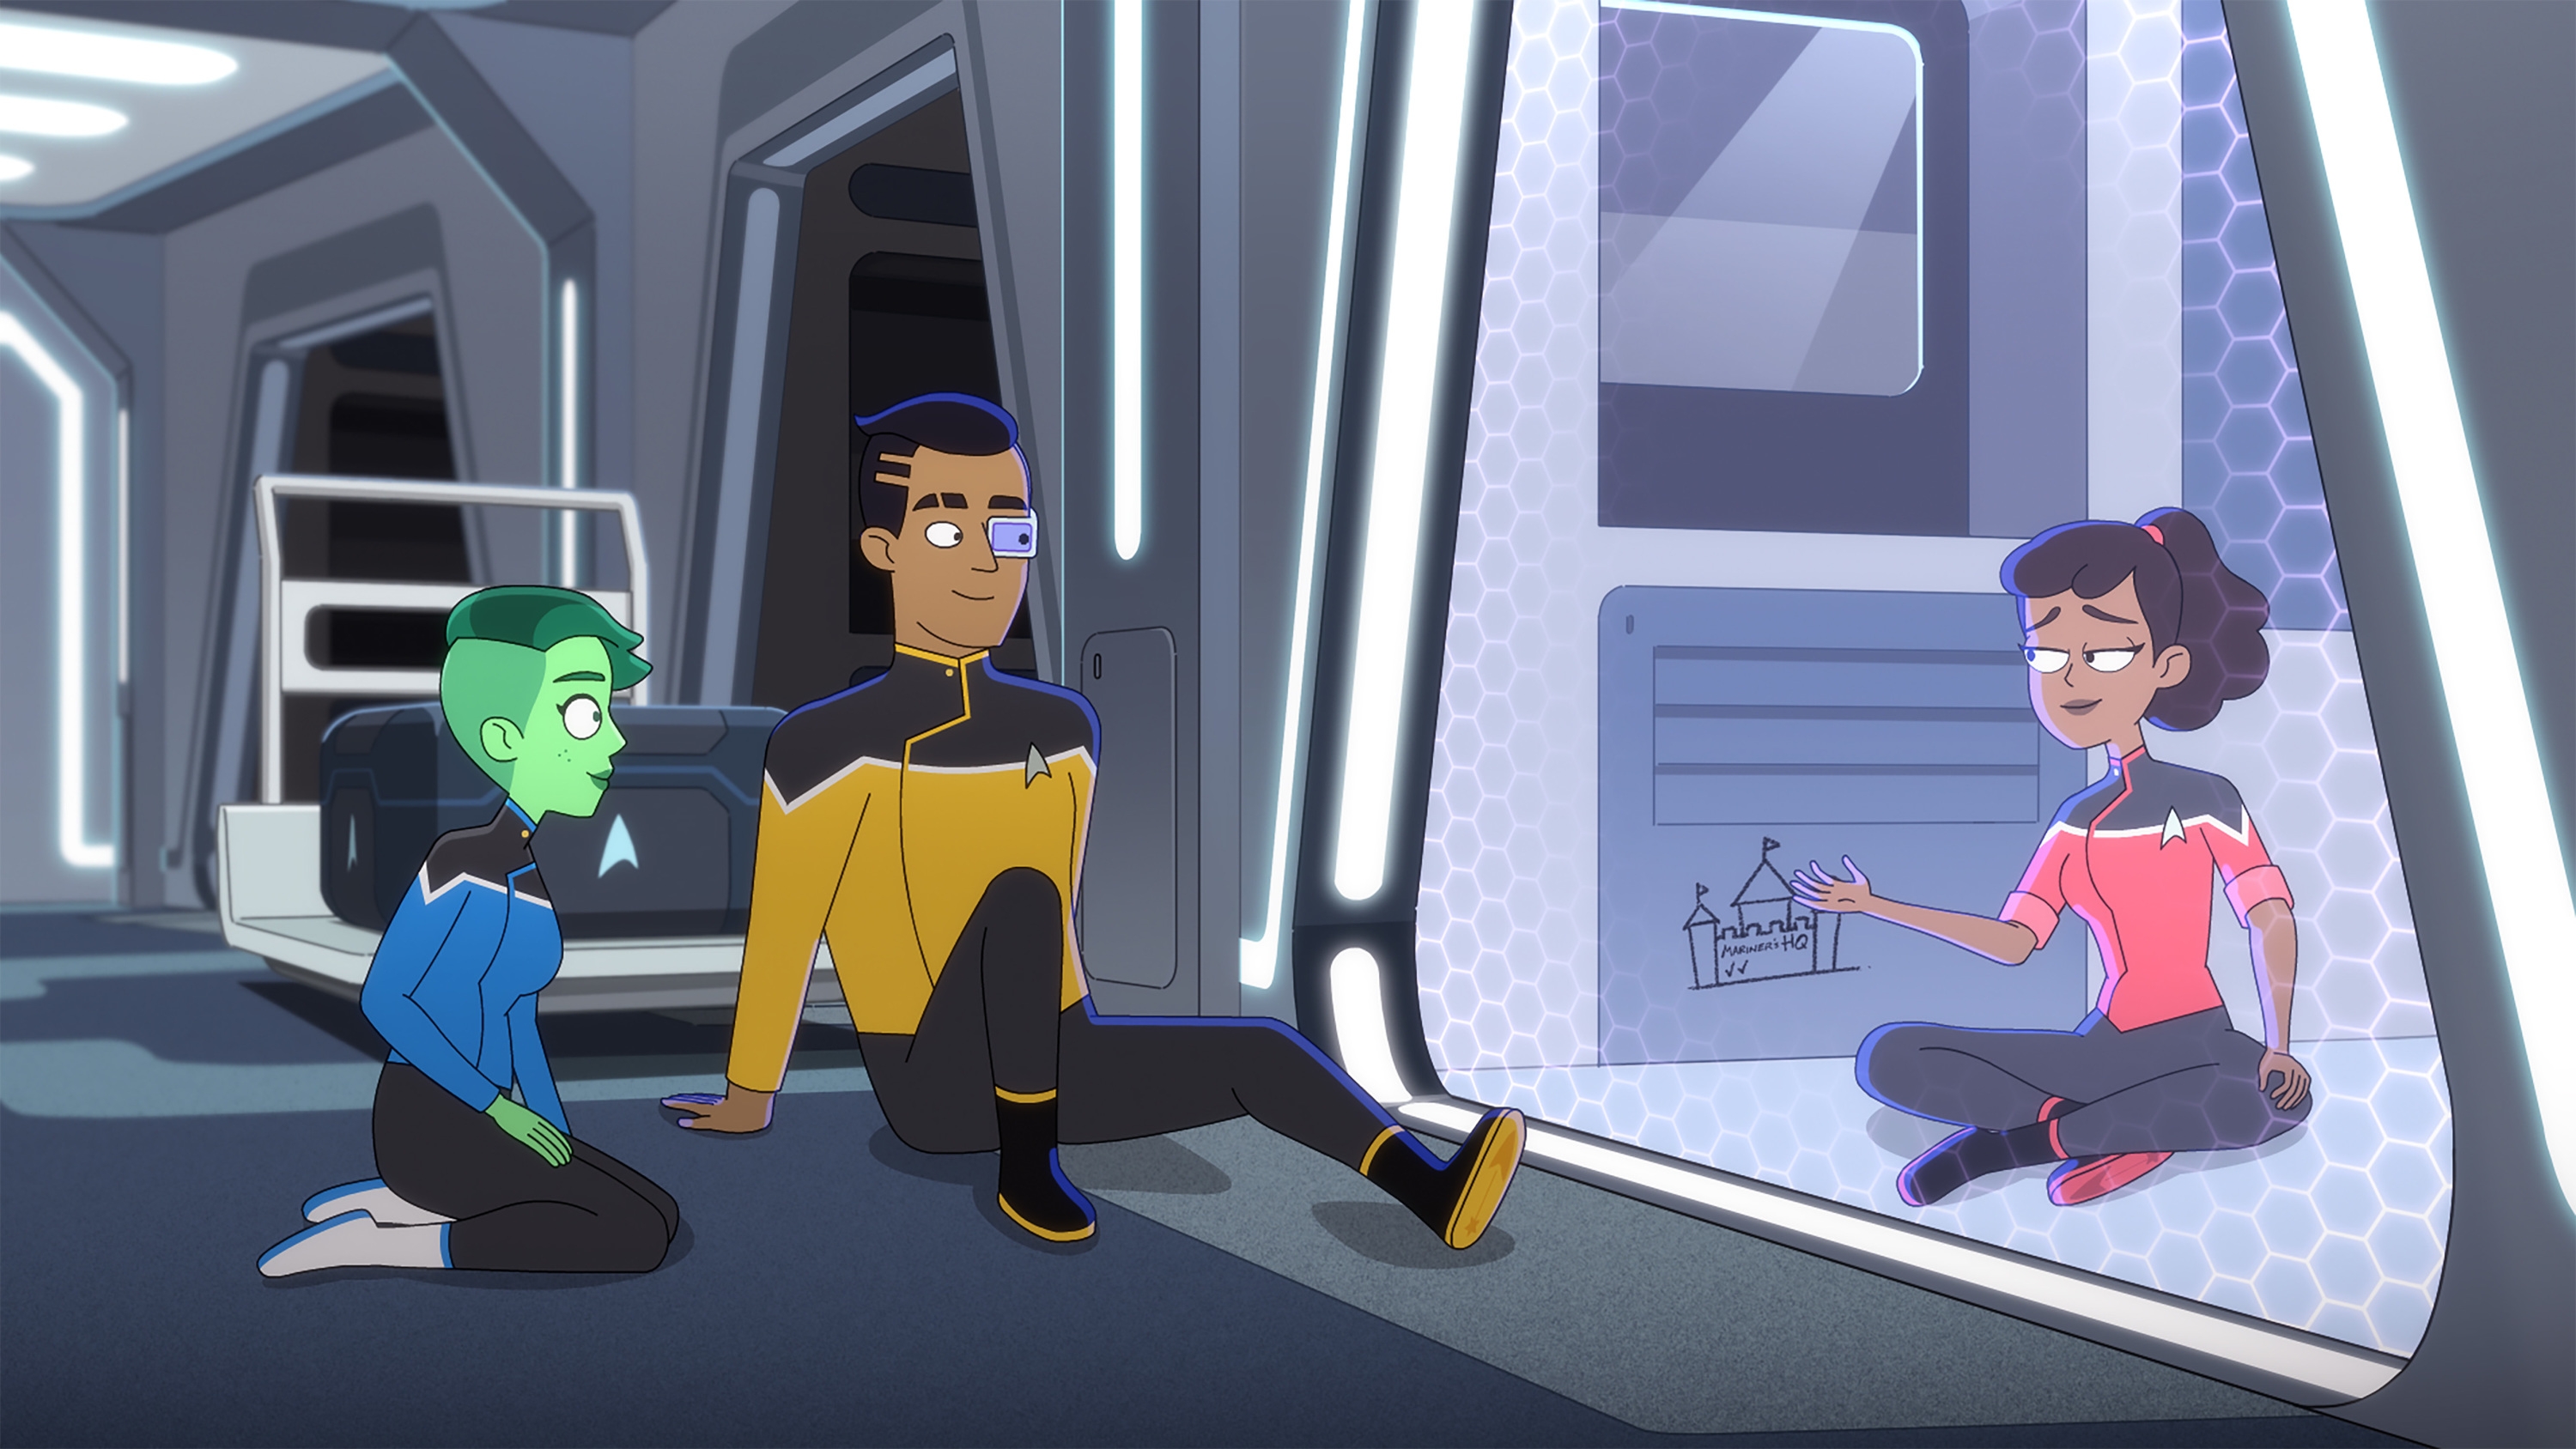 Star Trek: Lower Decks sets phasers to charm in season 2